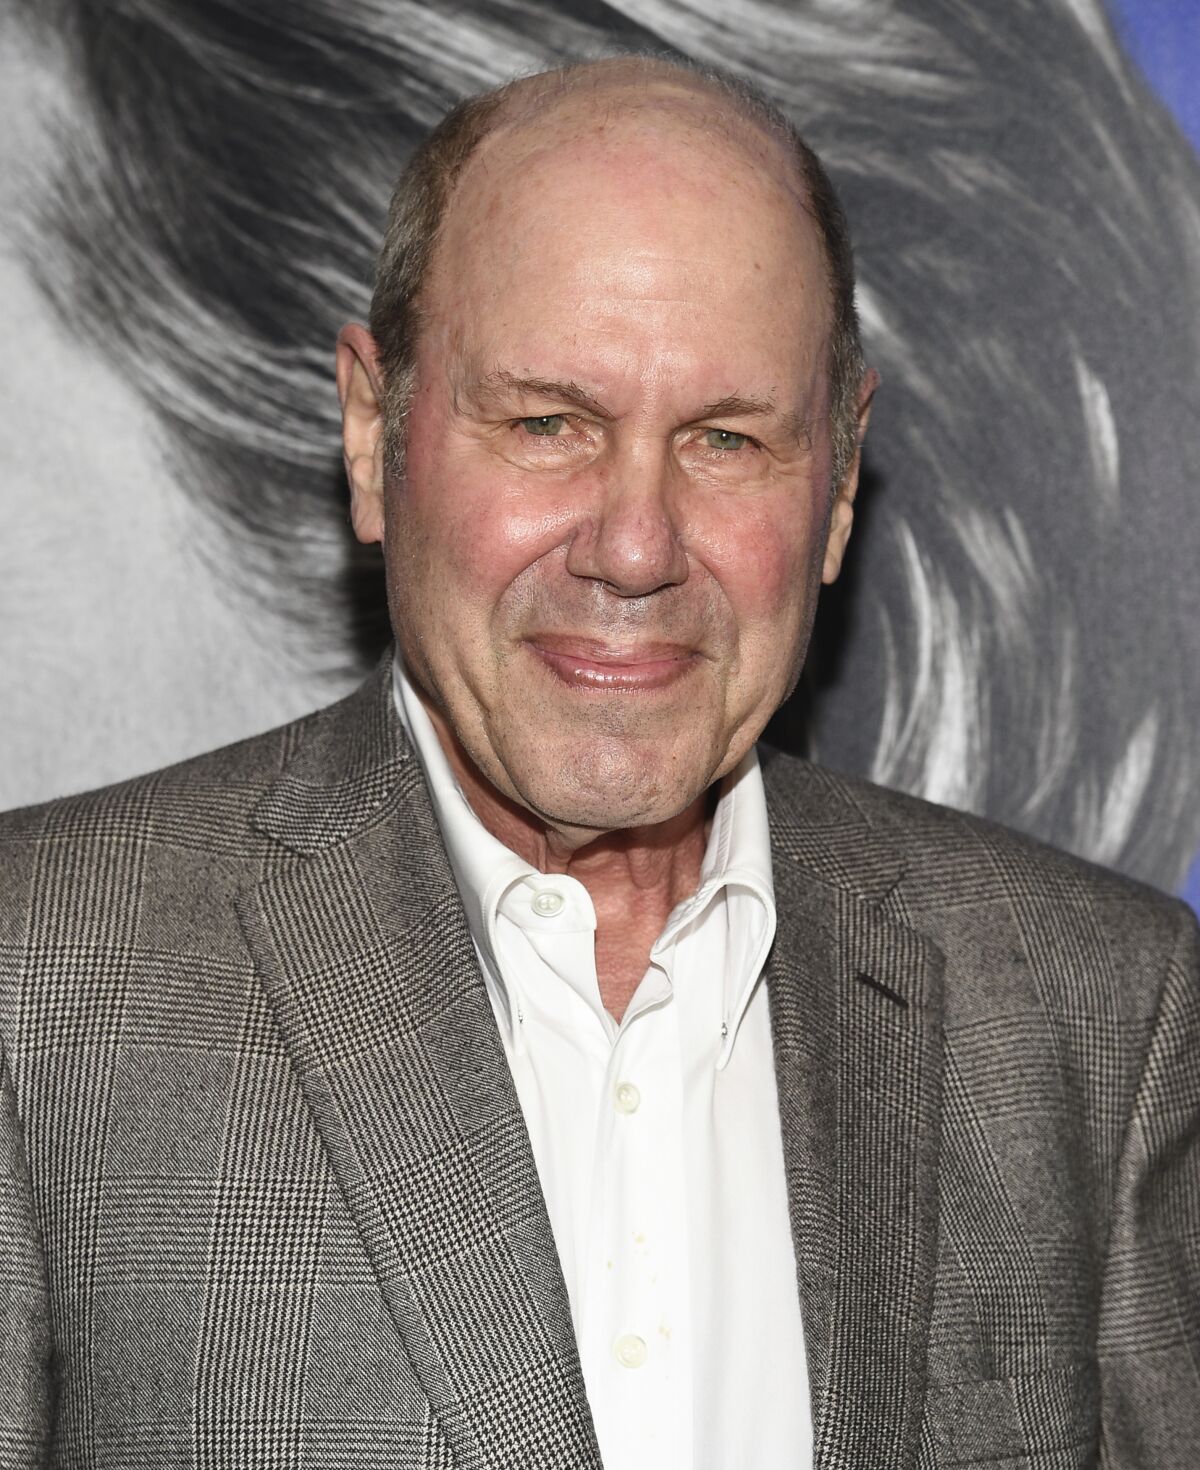 Michael Eisner in a gray suit